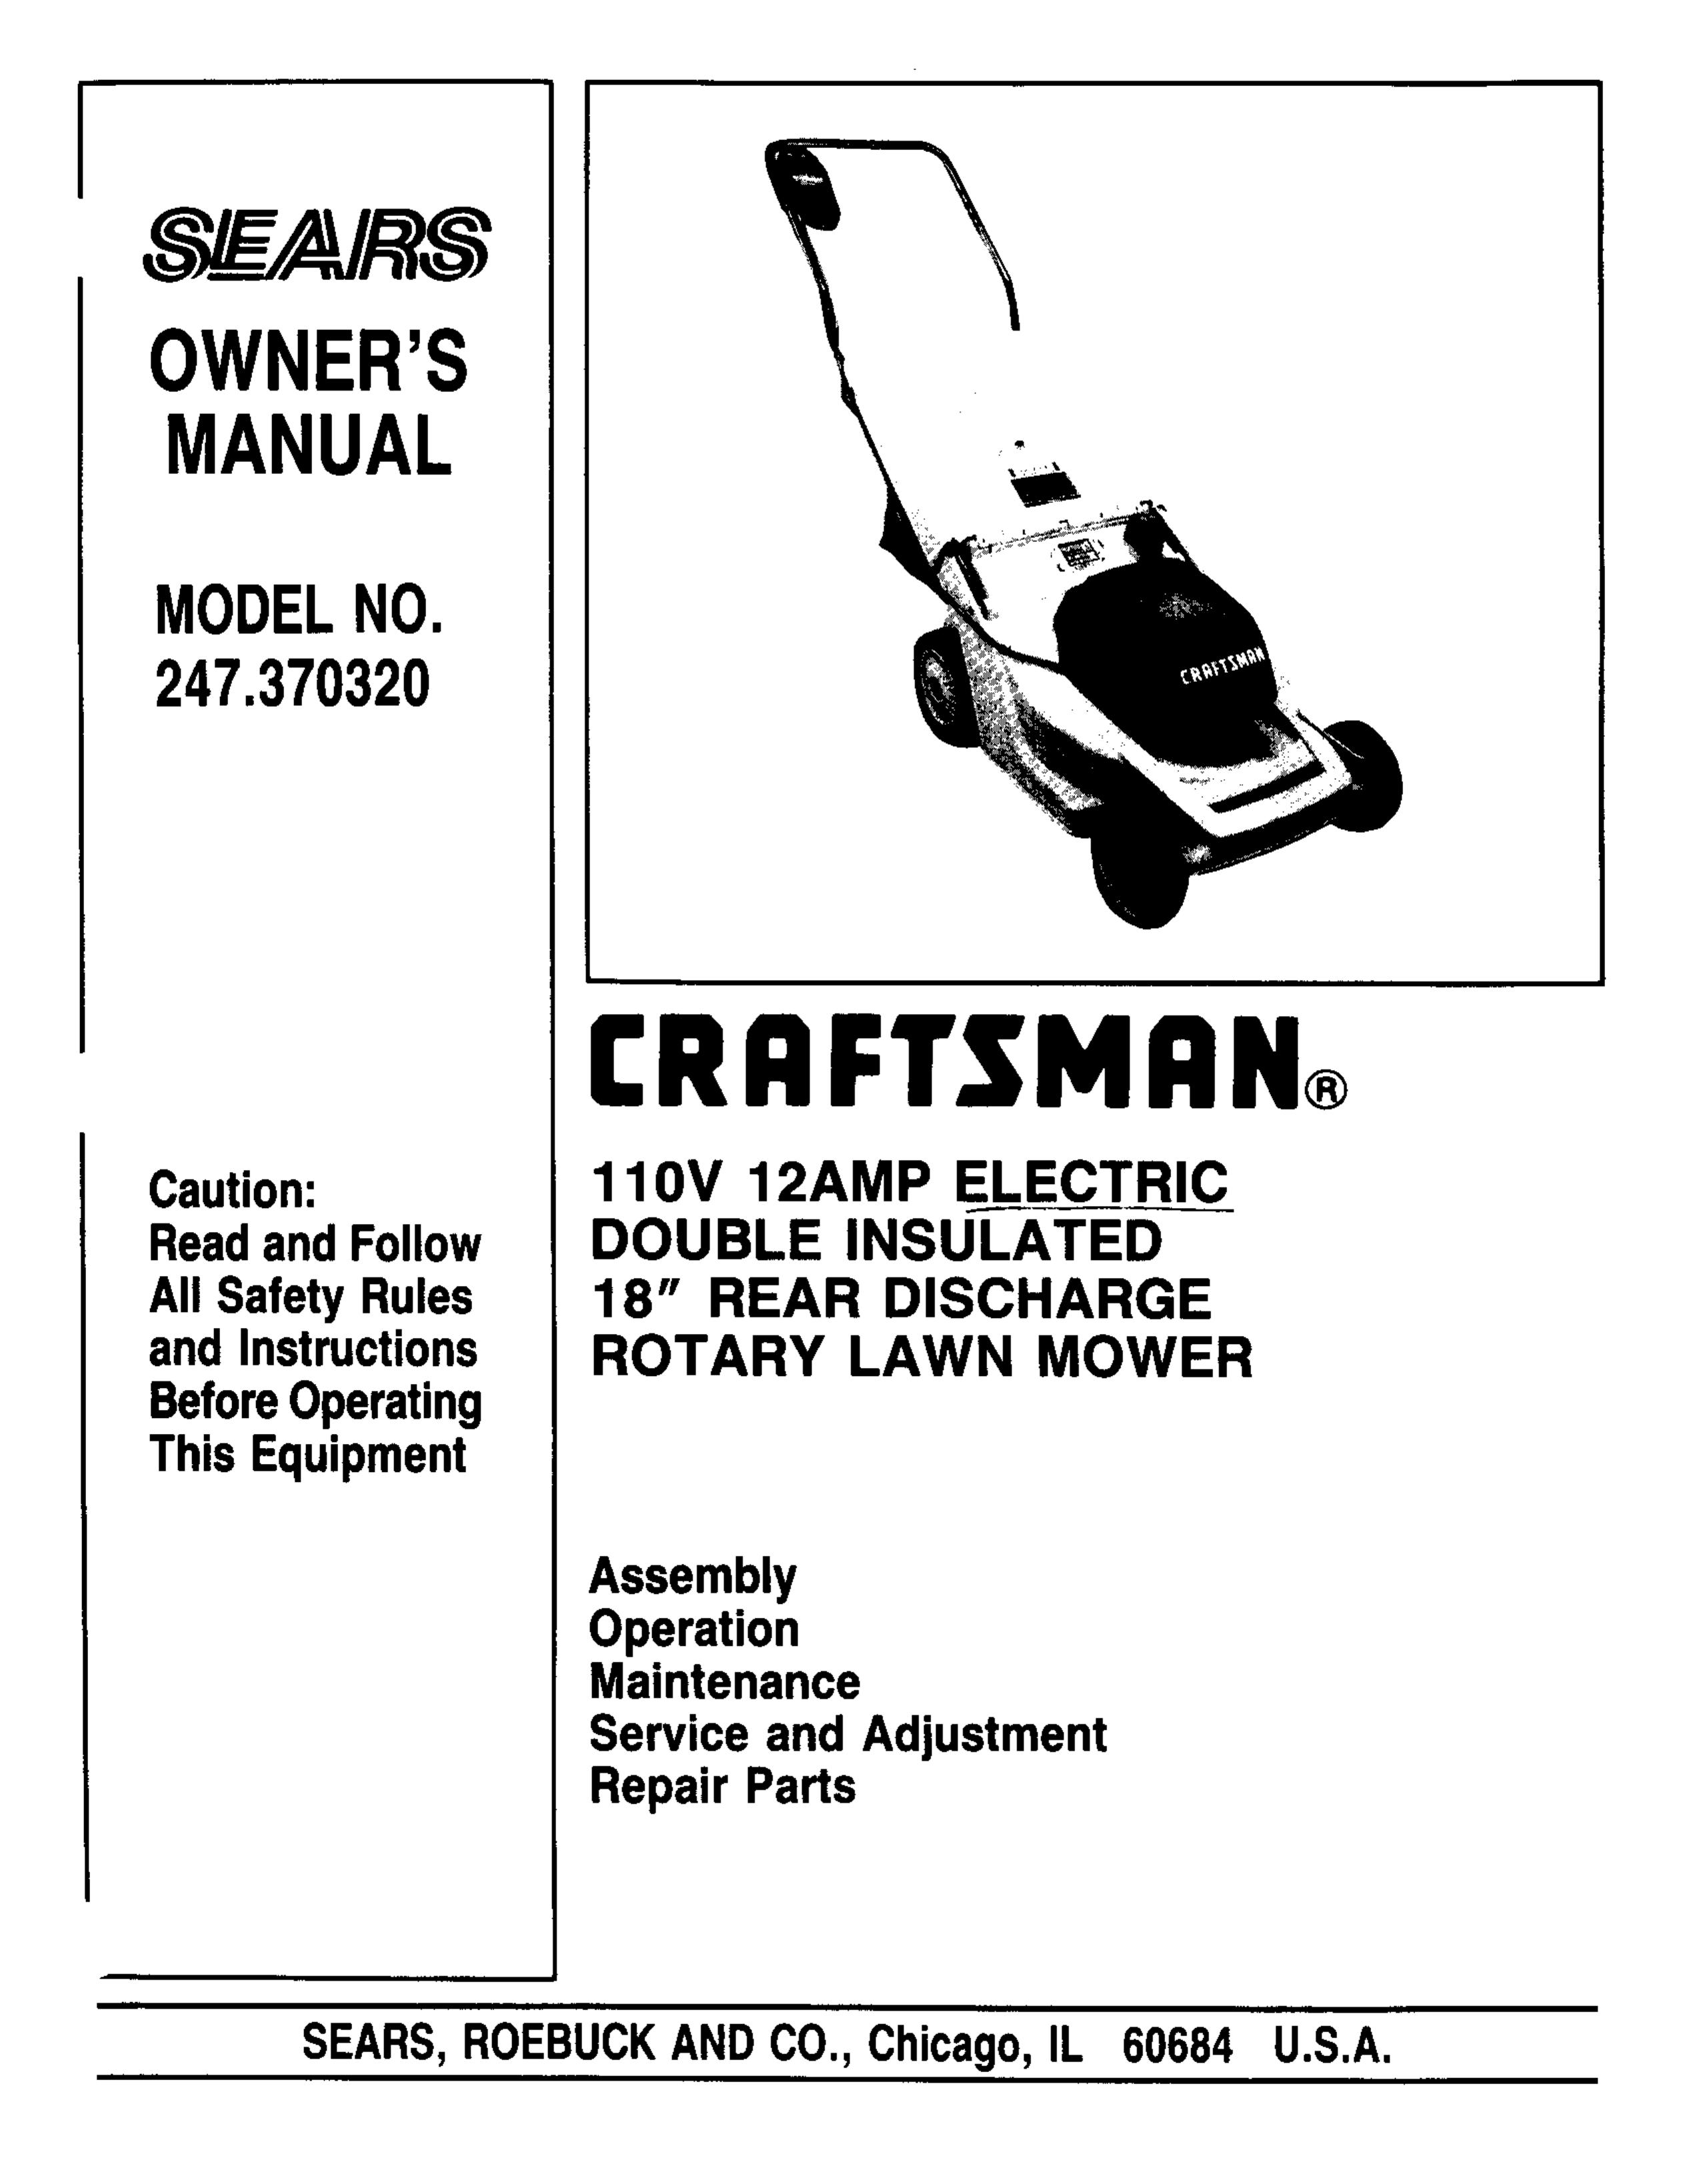 Craftsman 247.370320 Lawn Mower User Manual